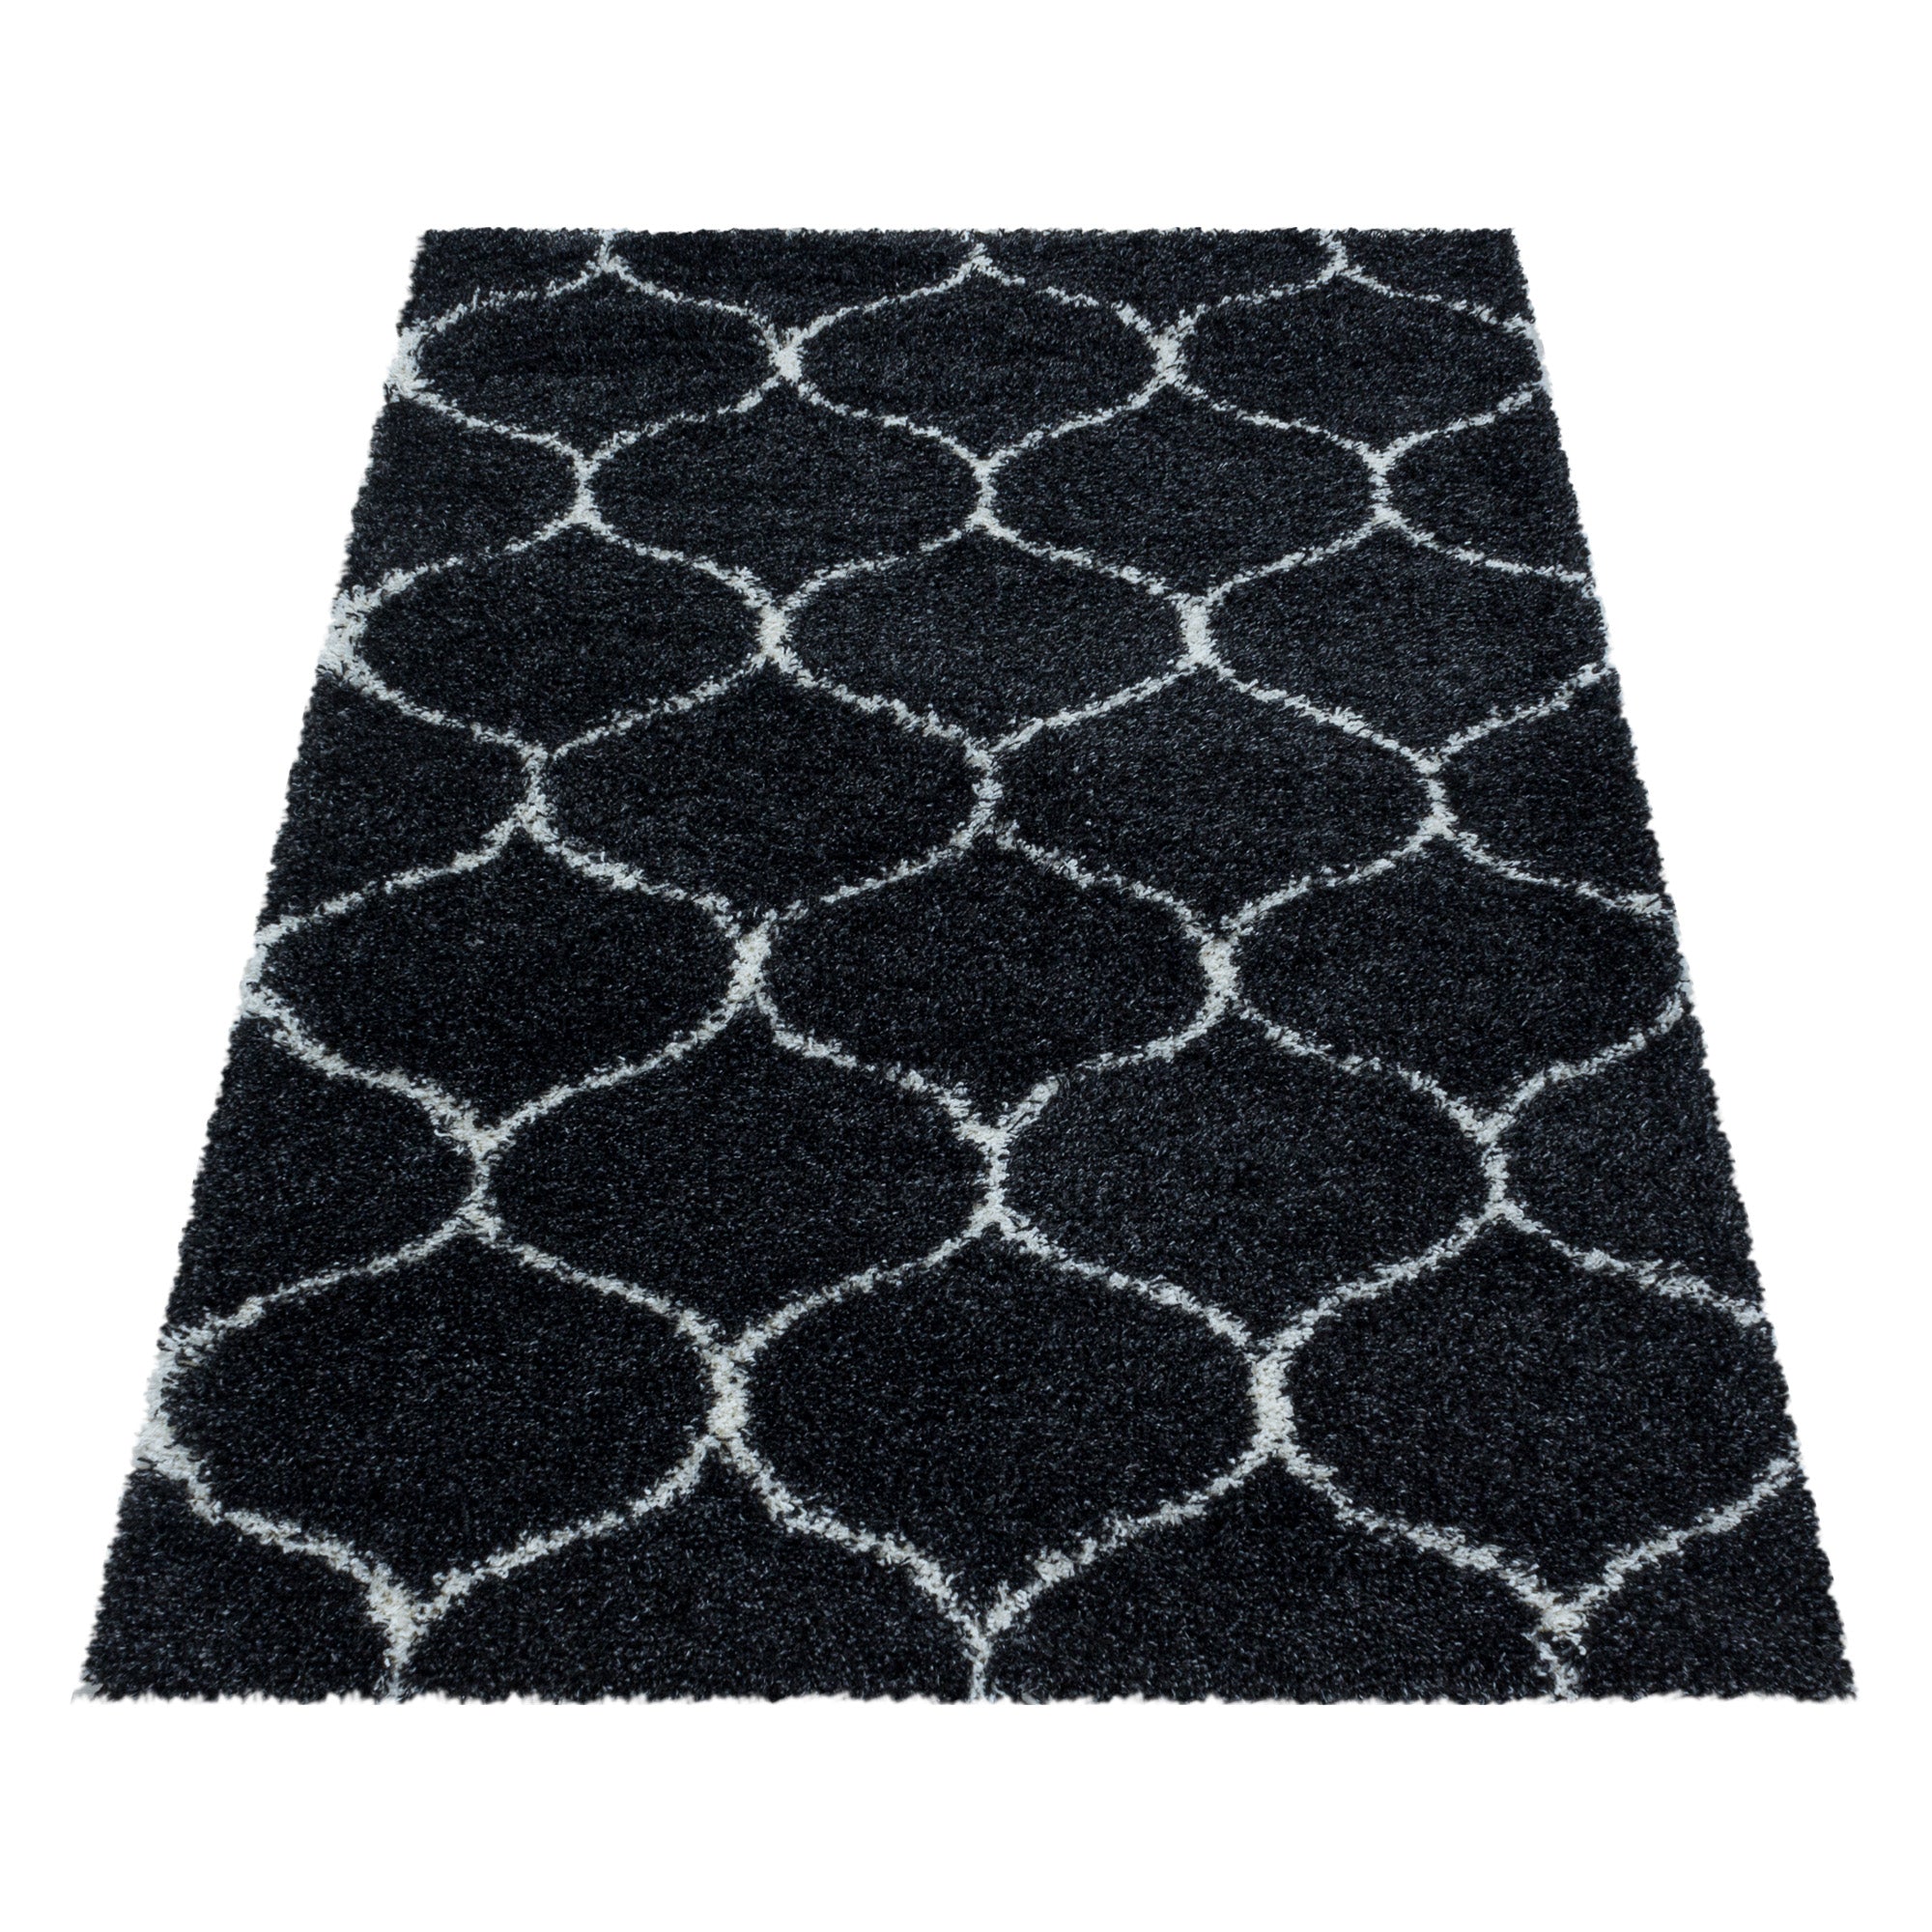 Design Hochflor Teppich Wohnzimmerteppich Muster Kachel Tile Jacquard